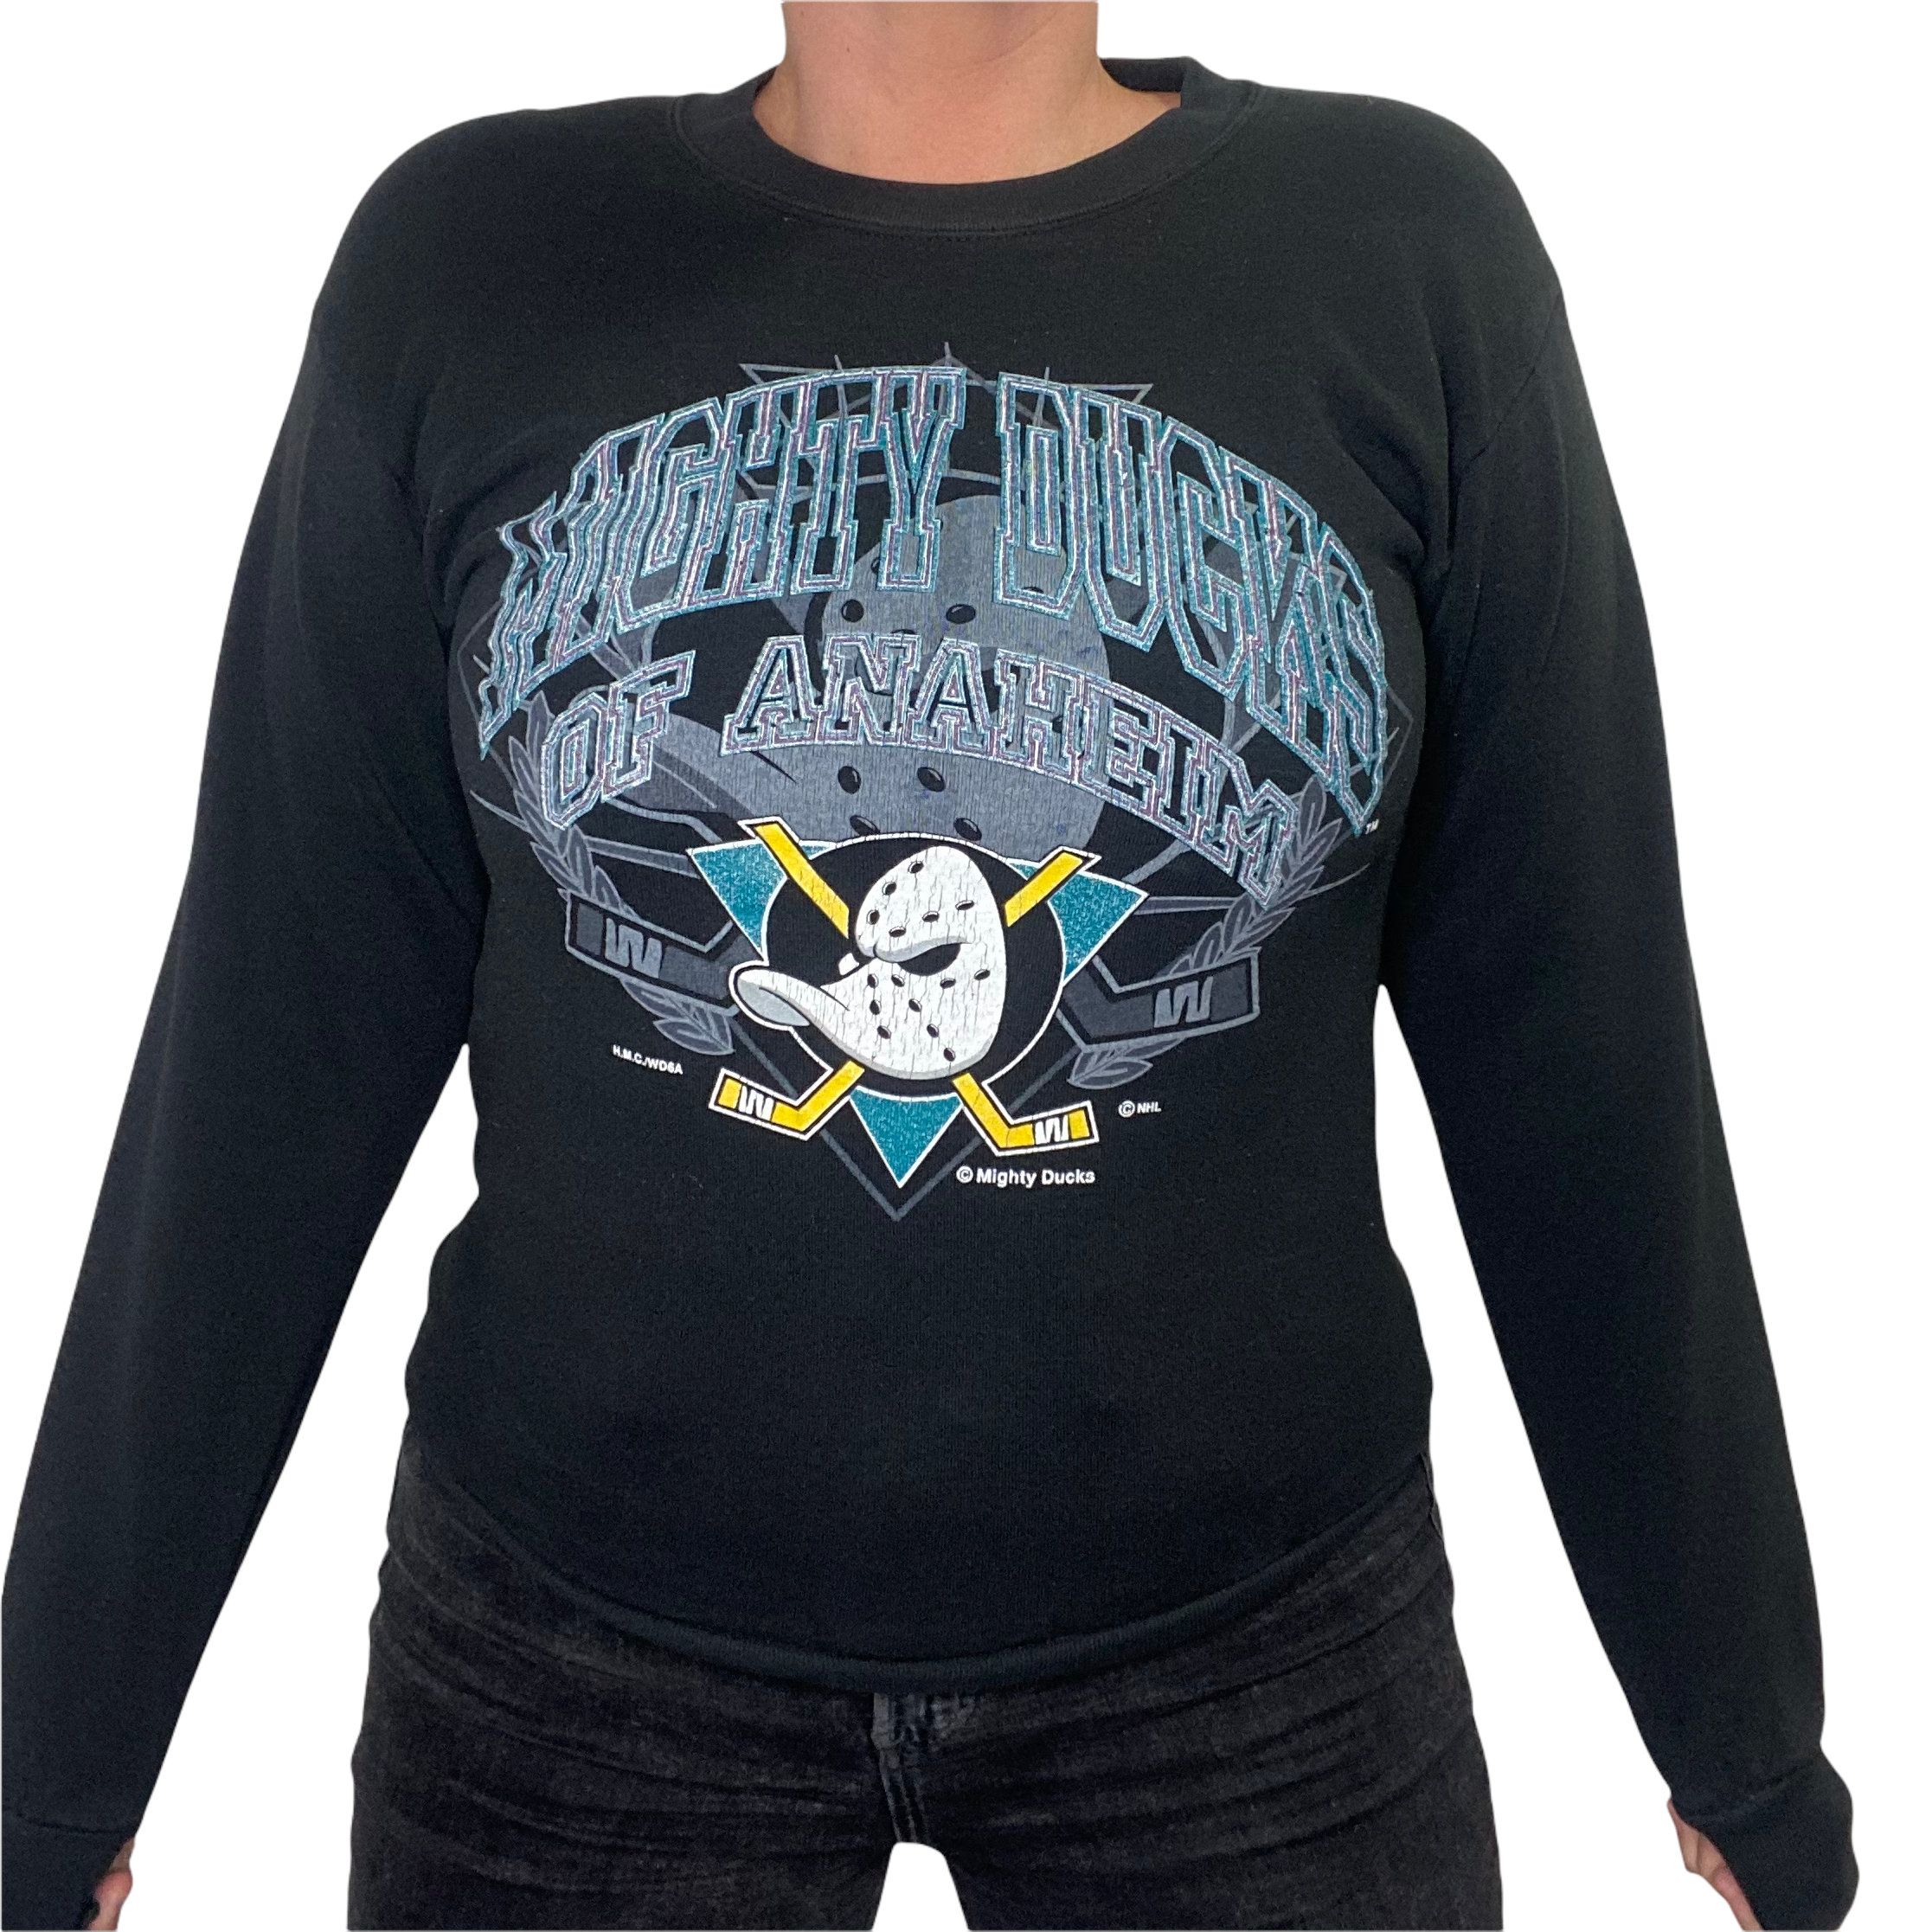 Ducks Hockey - Mighty Ducks T-Shirt, hoodie, longsleeve, sweatshirt, v-neck  tee